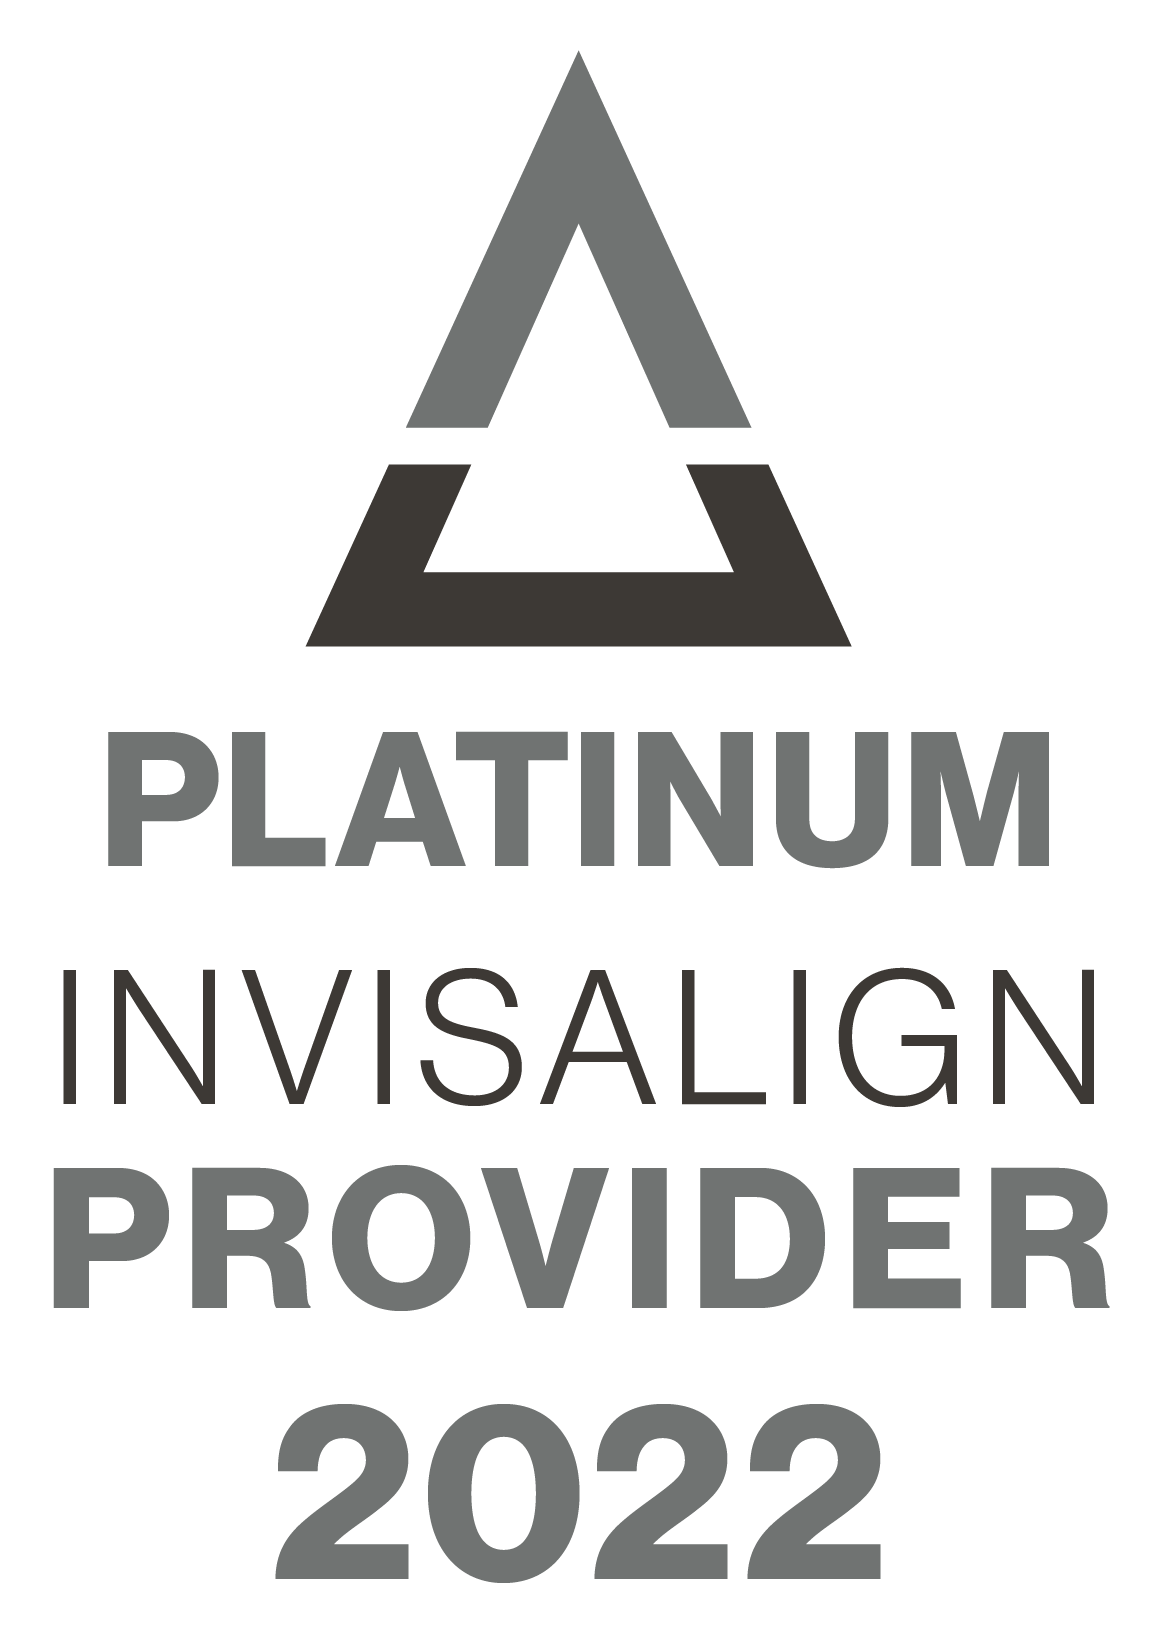 Platinum Invisalign Provider 2022